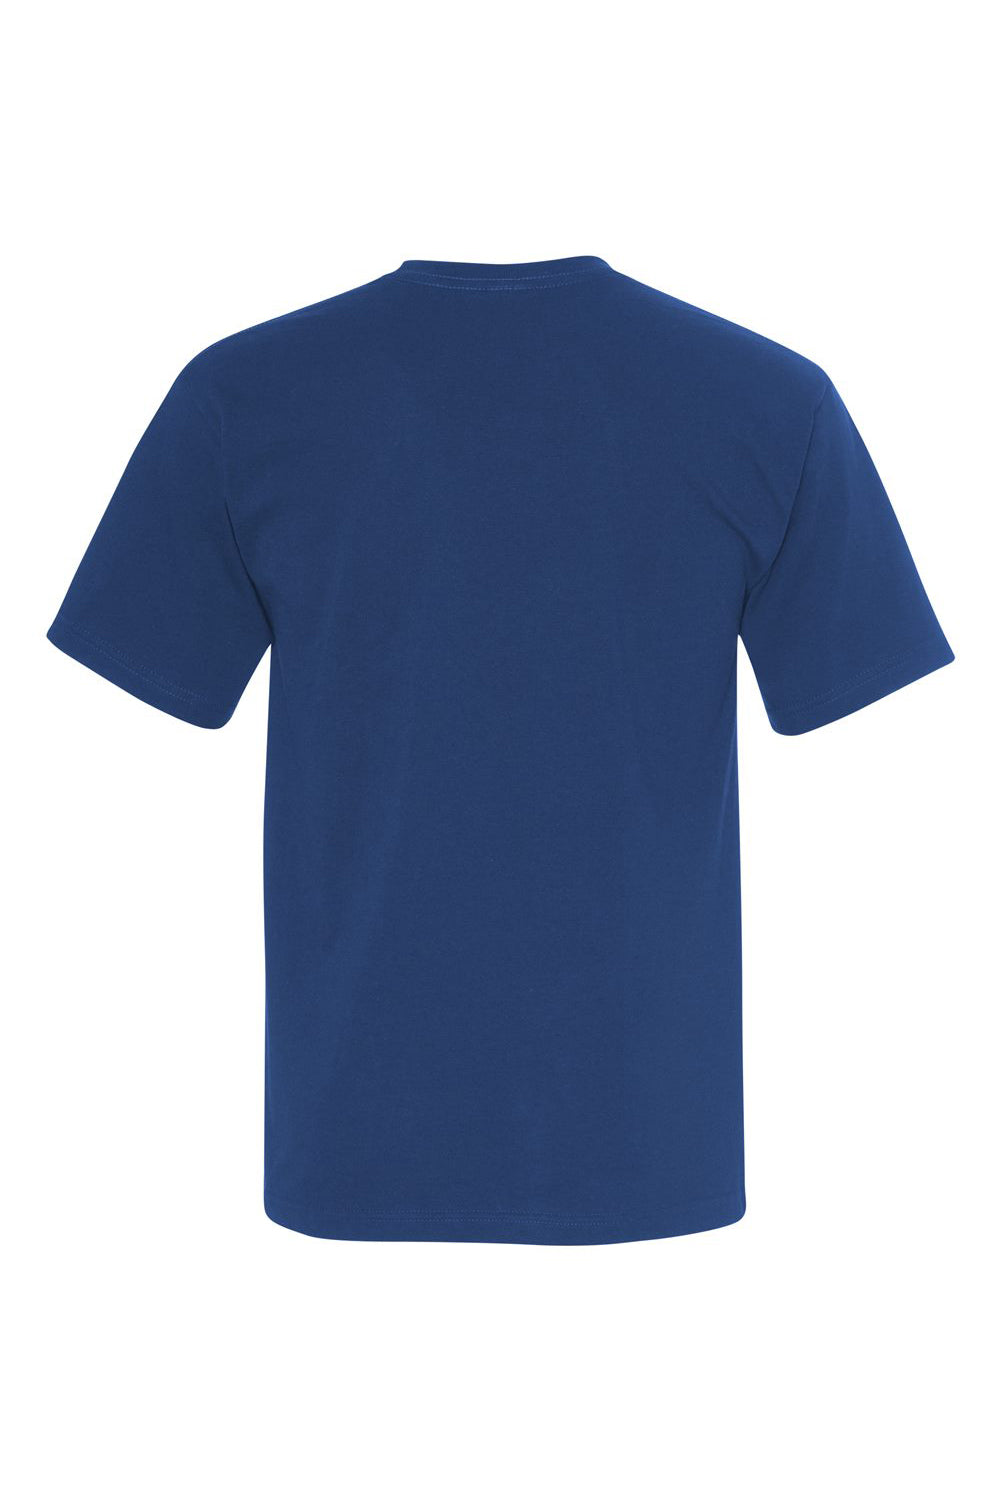 Bayside BA5040 Mens USA Made Short Sleeve Crewneck T-Shirt Light Navy Blue Flat Back